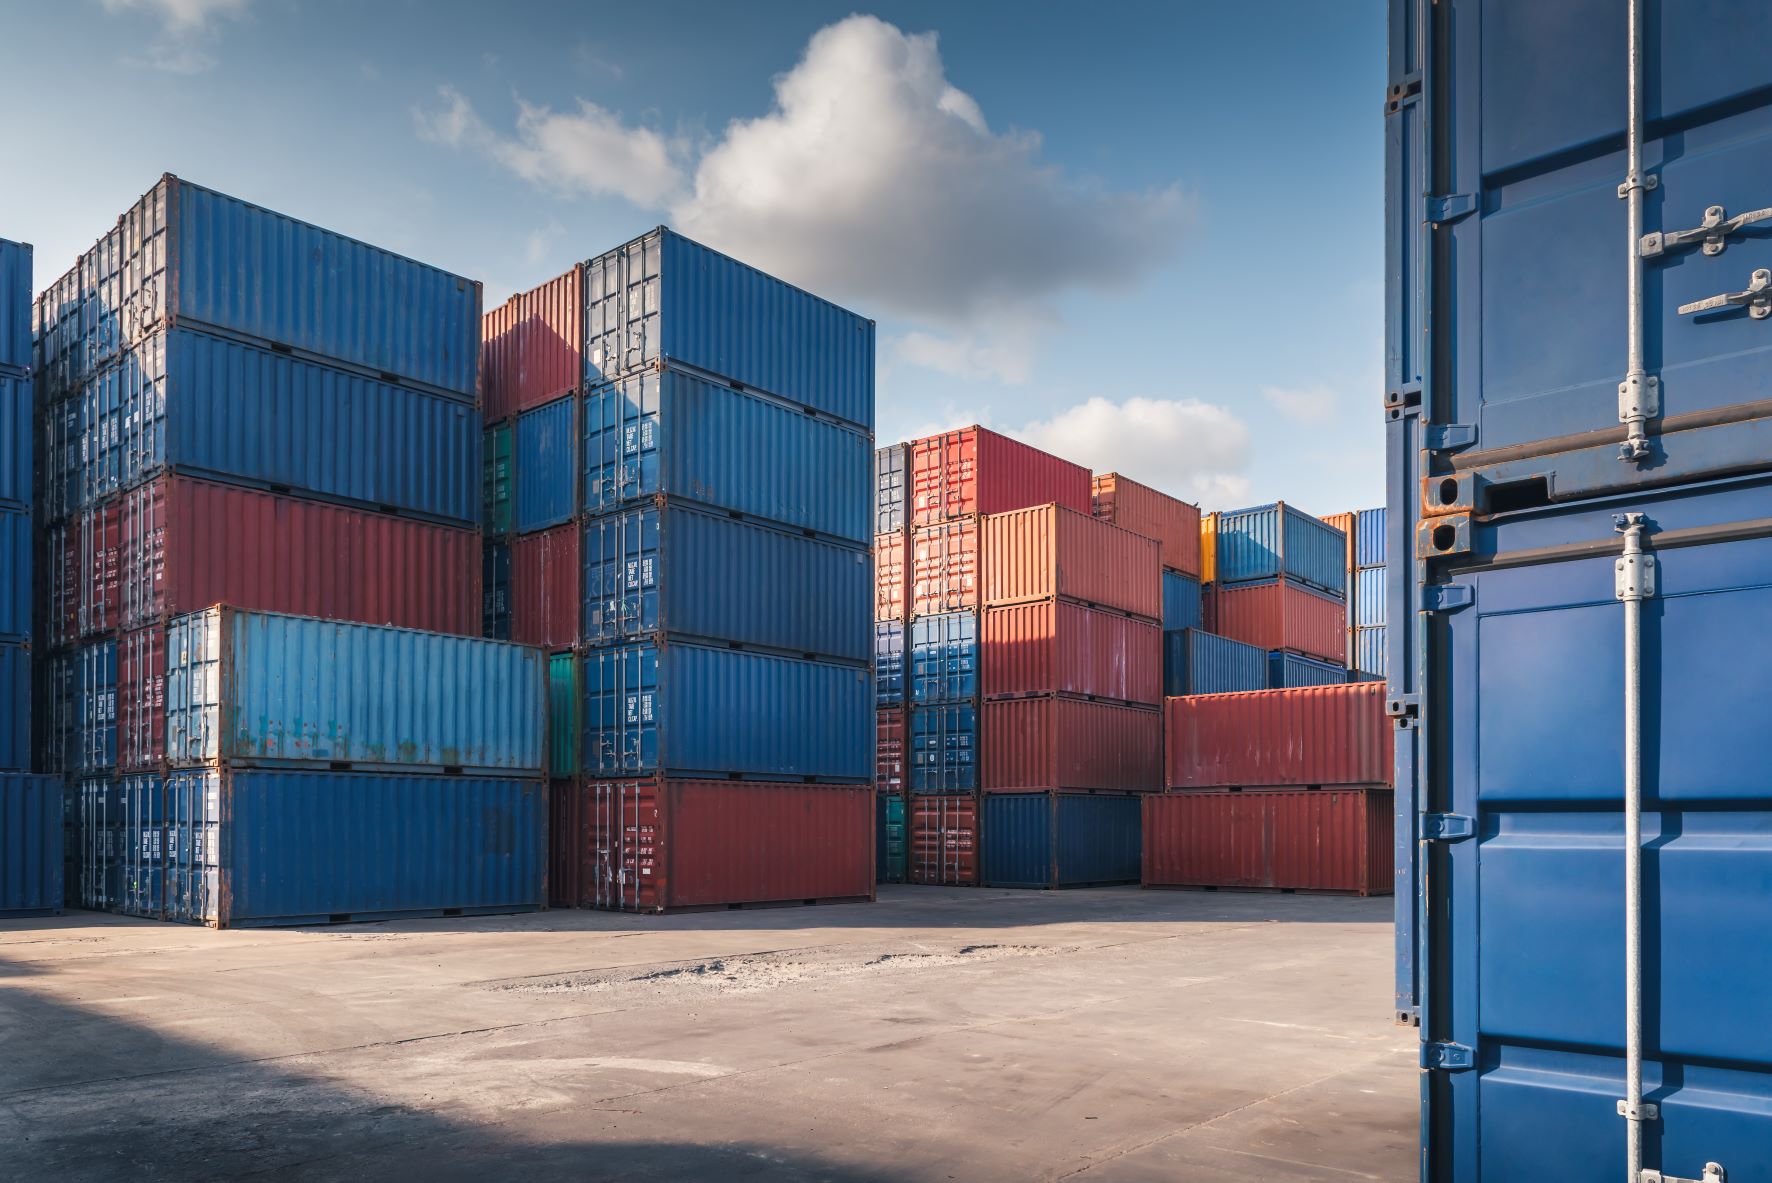 kontener, transport, import, handel zagraniczny, kontenery